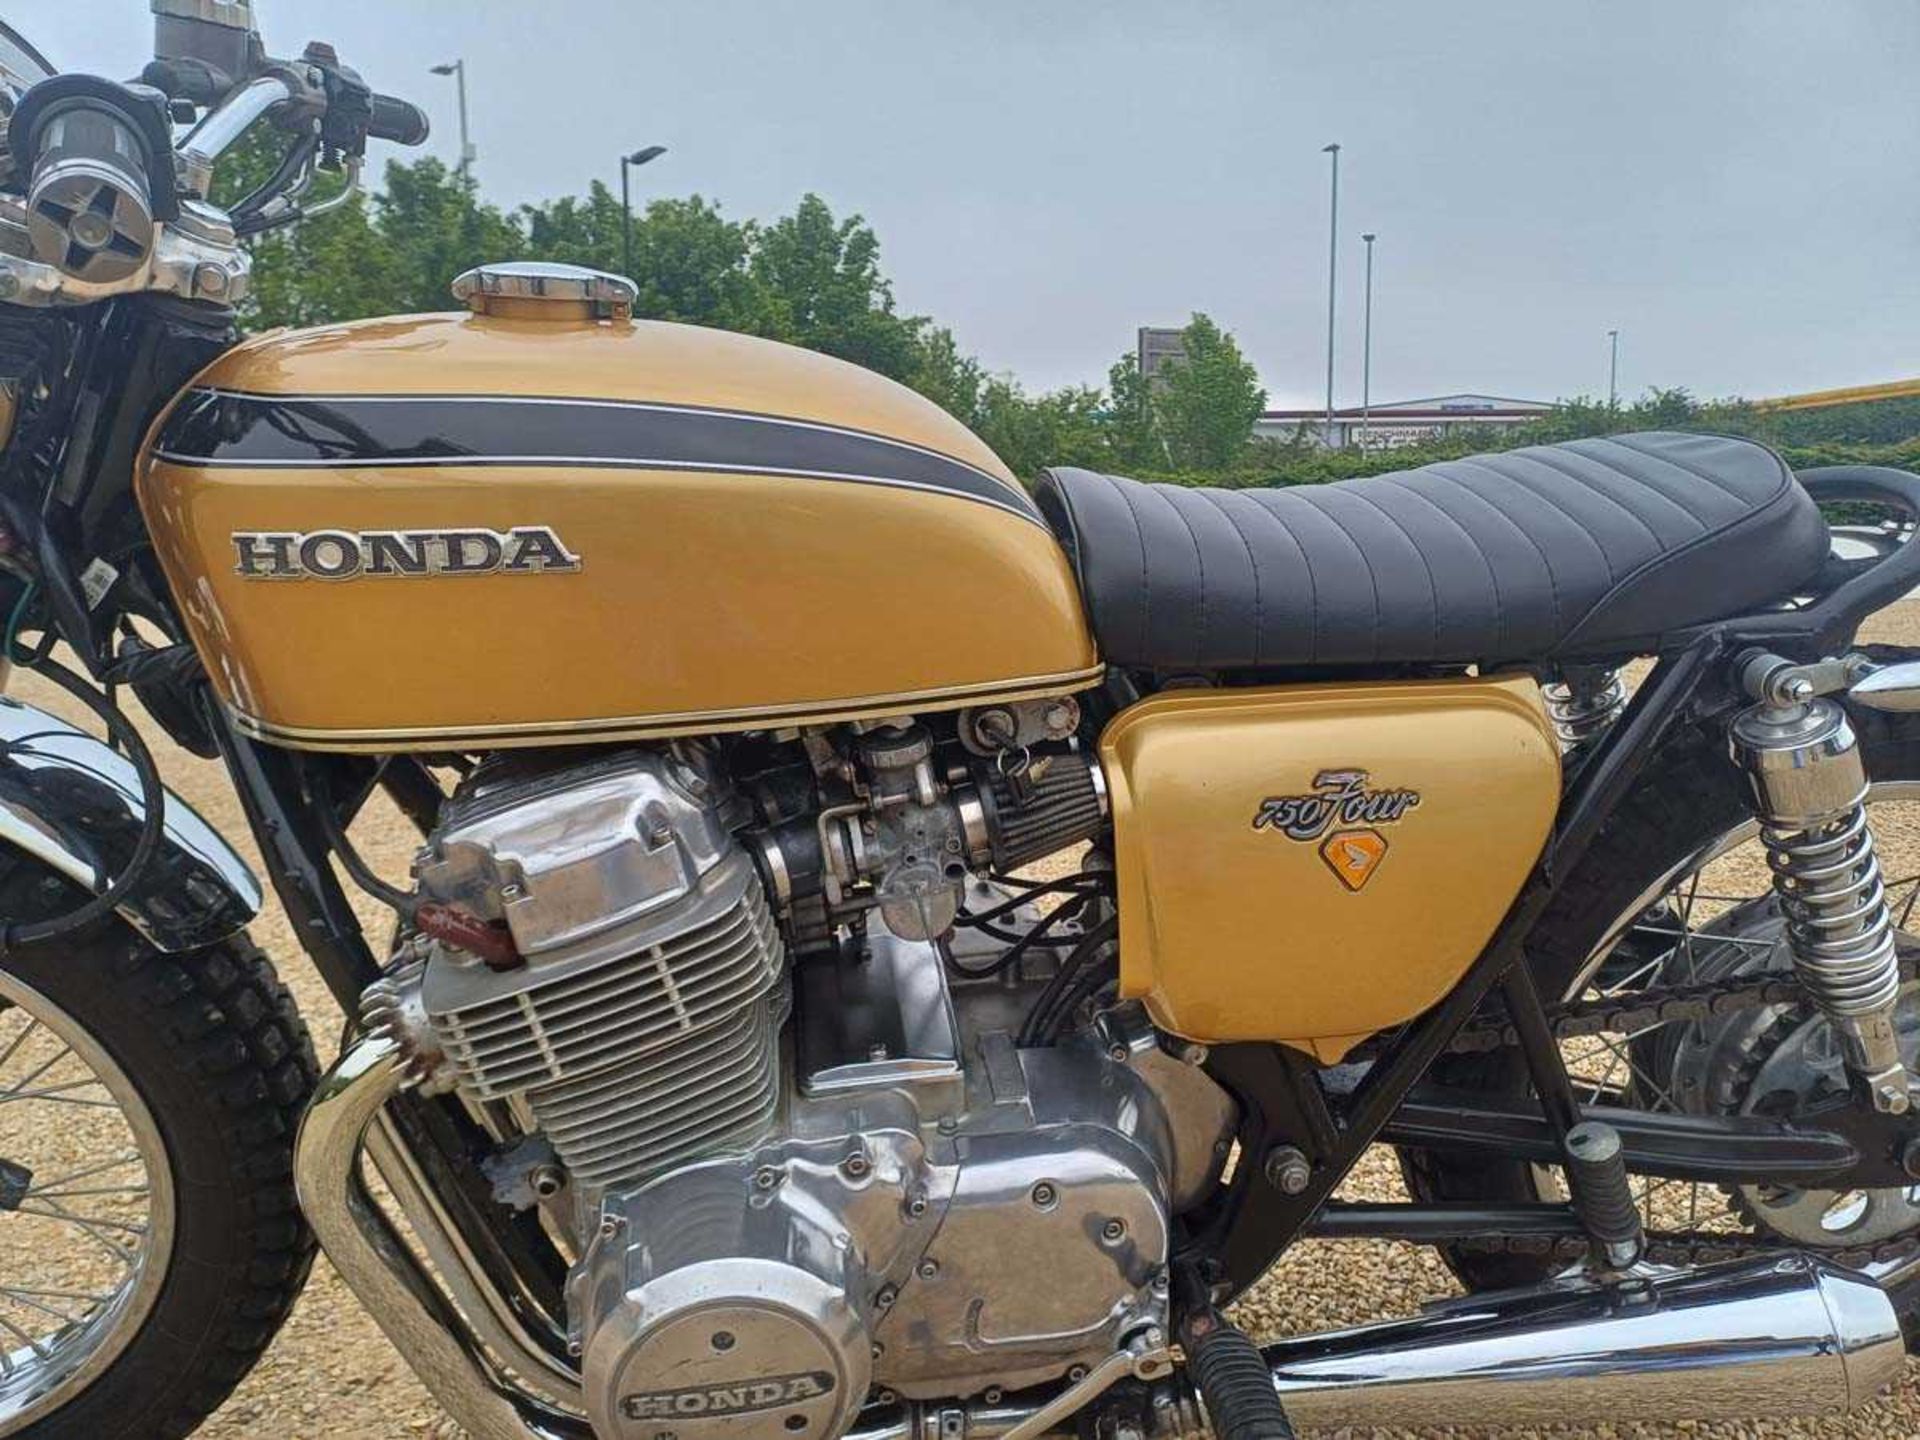 Honda CB750 Historic Motorcycle - Image 13 of 13